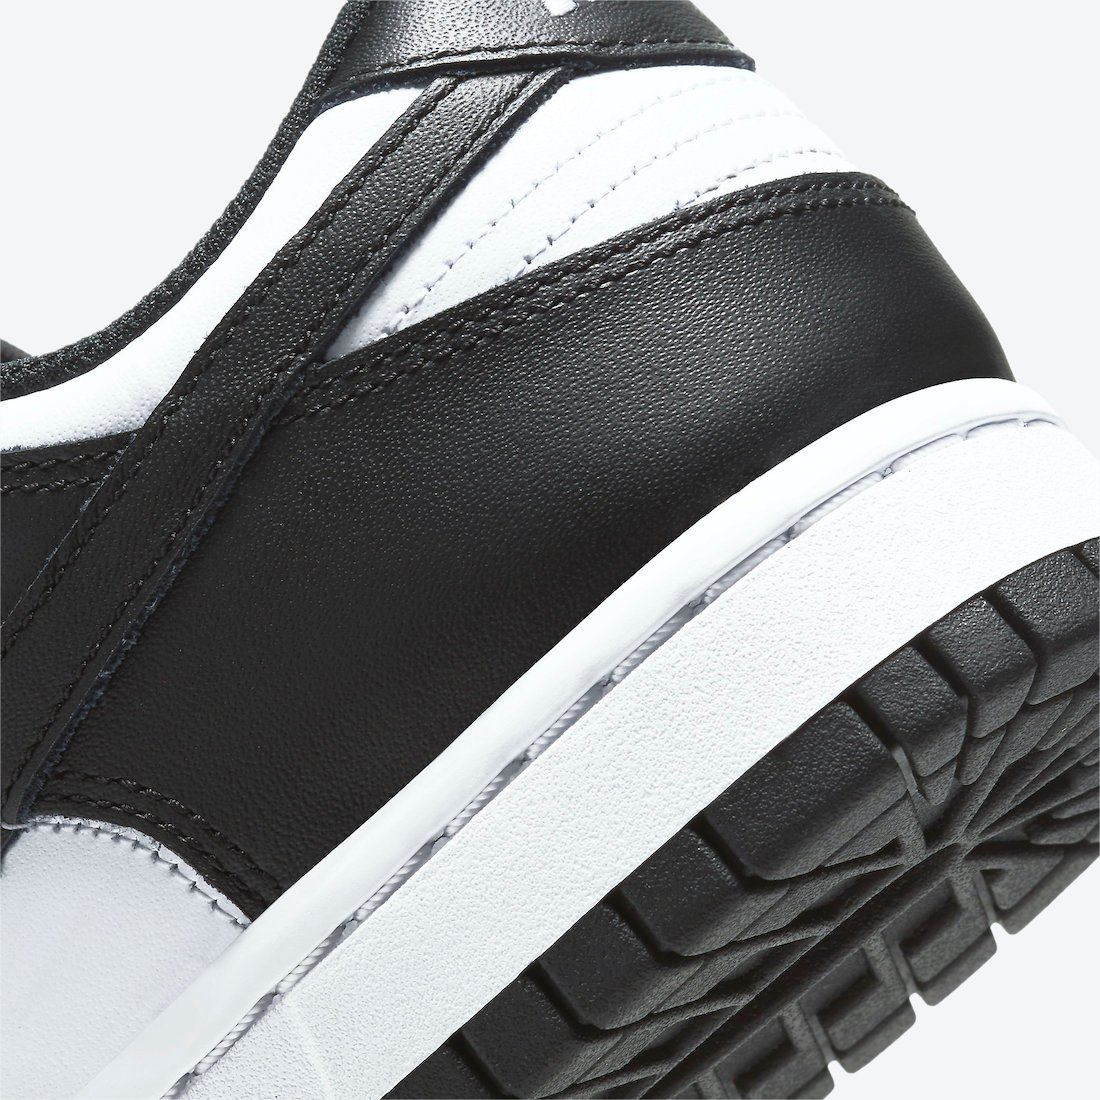 Nike Dunk Low White Black DD1391-100 Release Info Price